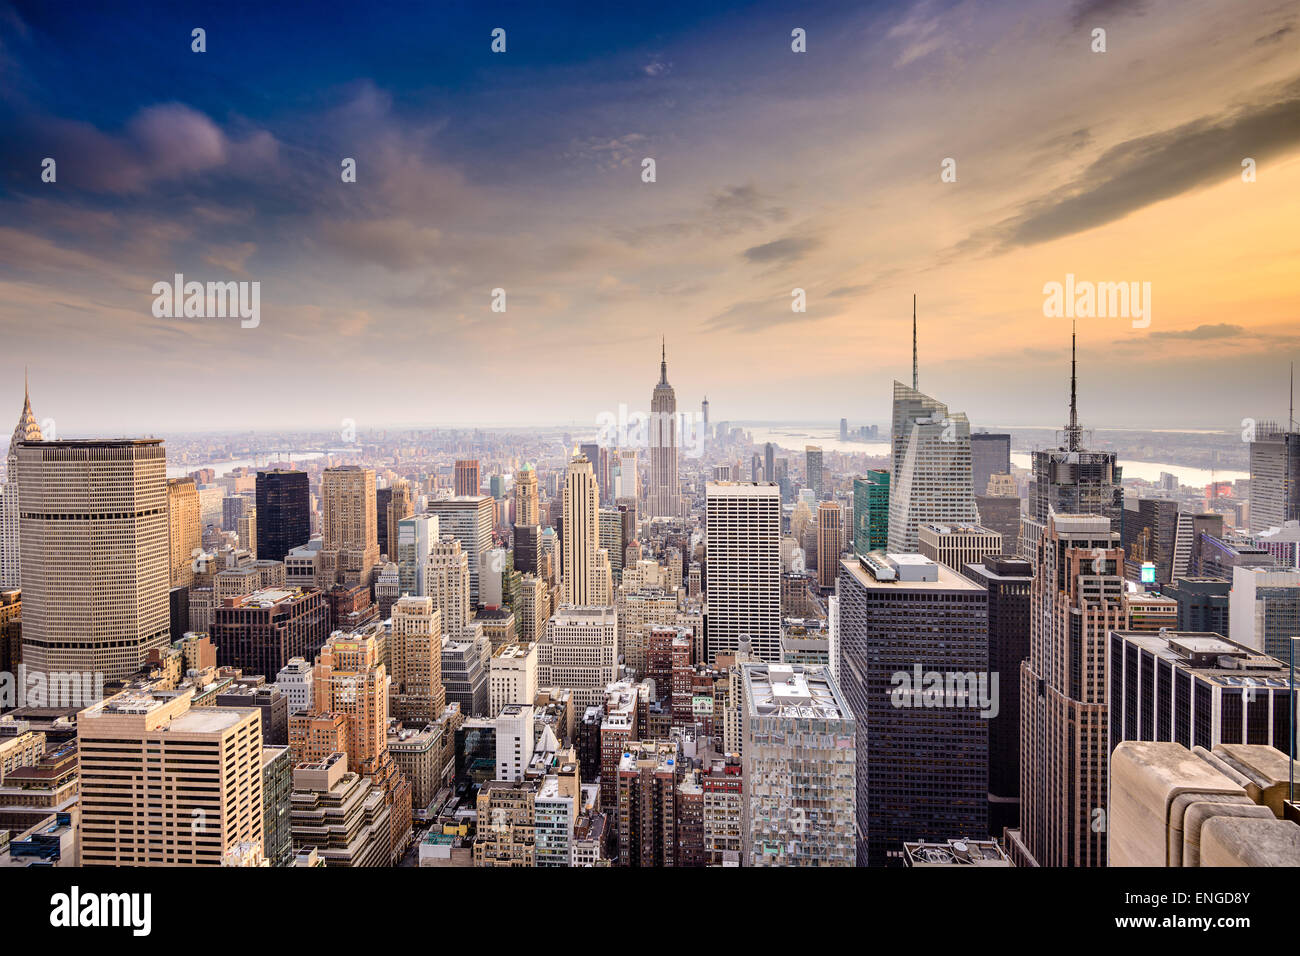 New York City, USA famous skyline over Manhattan. Stock Photo